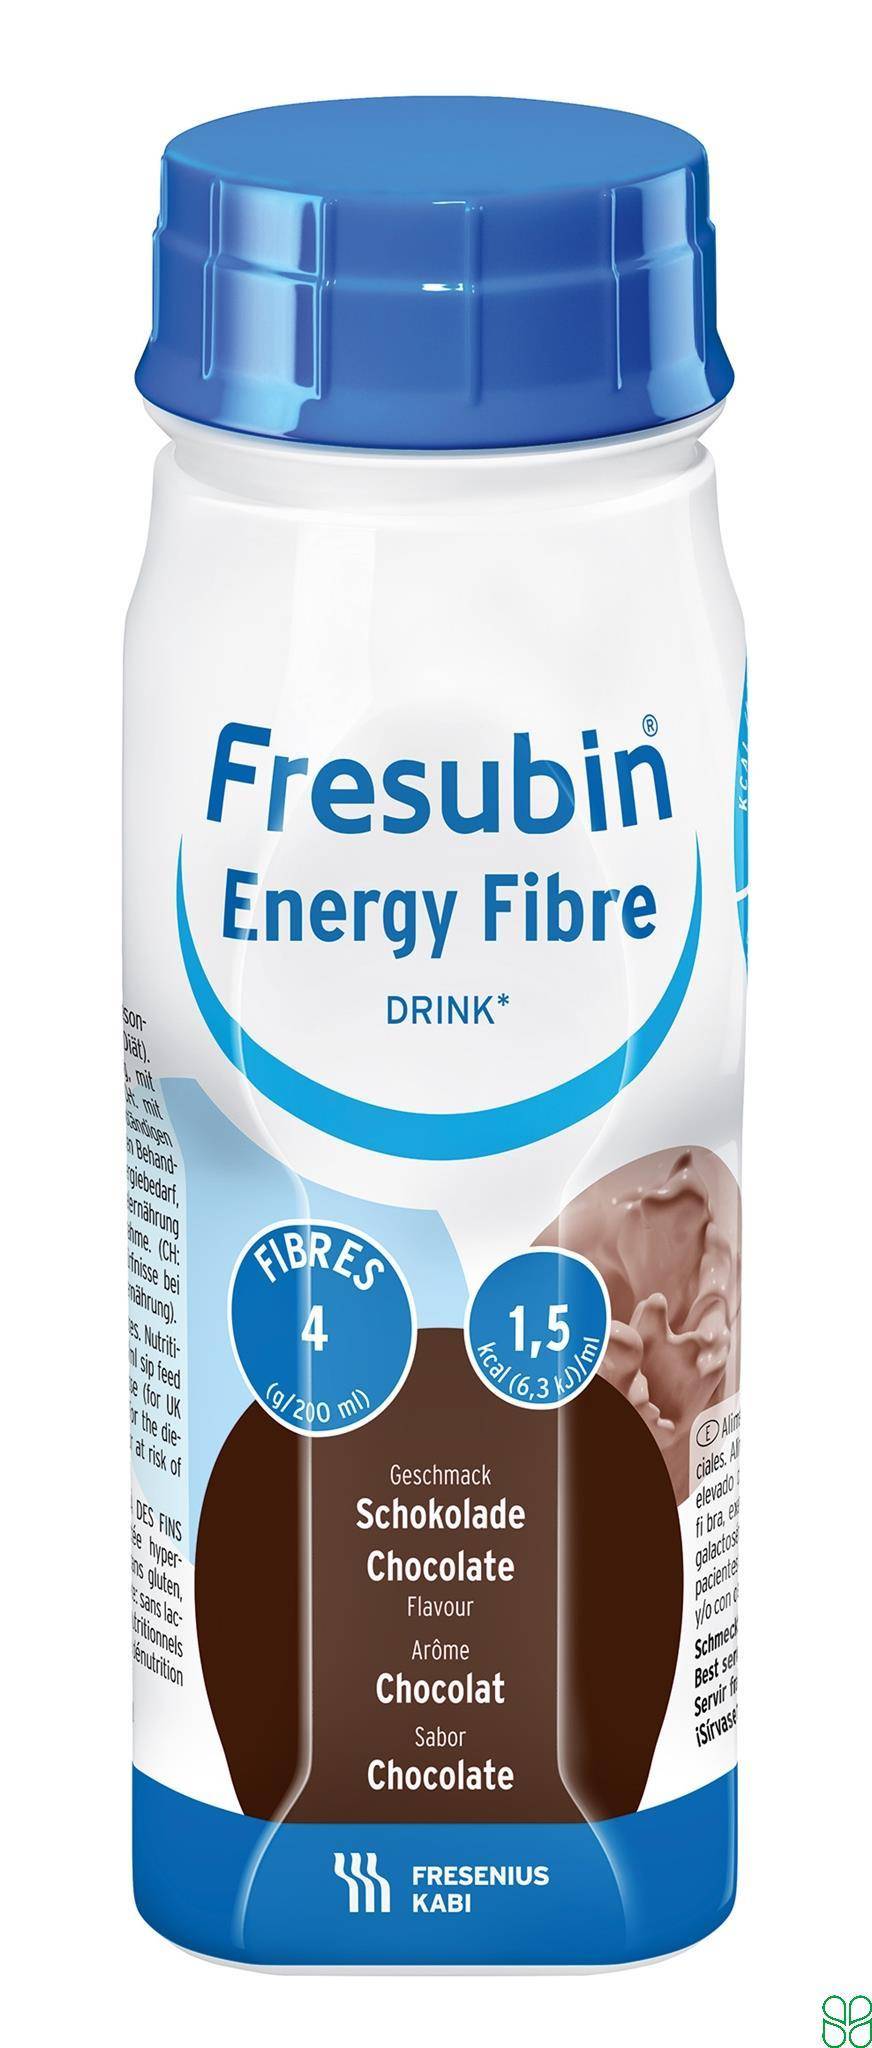 Fresubin Energy Fibre Drink Chocolade Flesjes 4 x 200ml